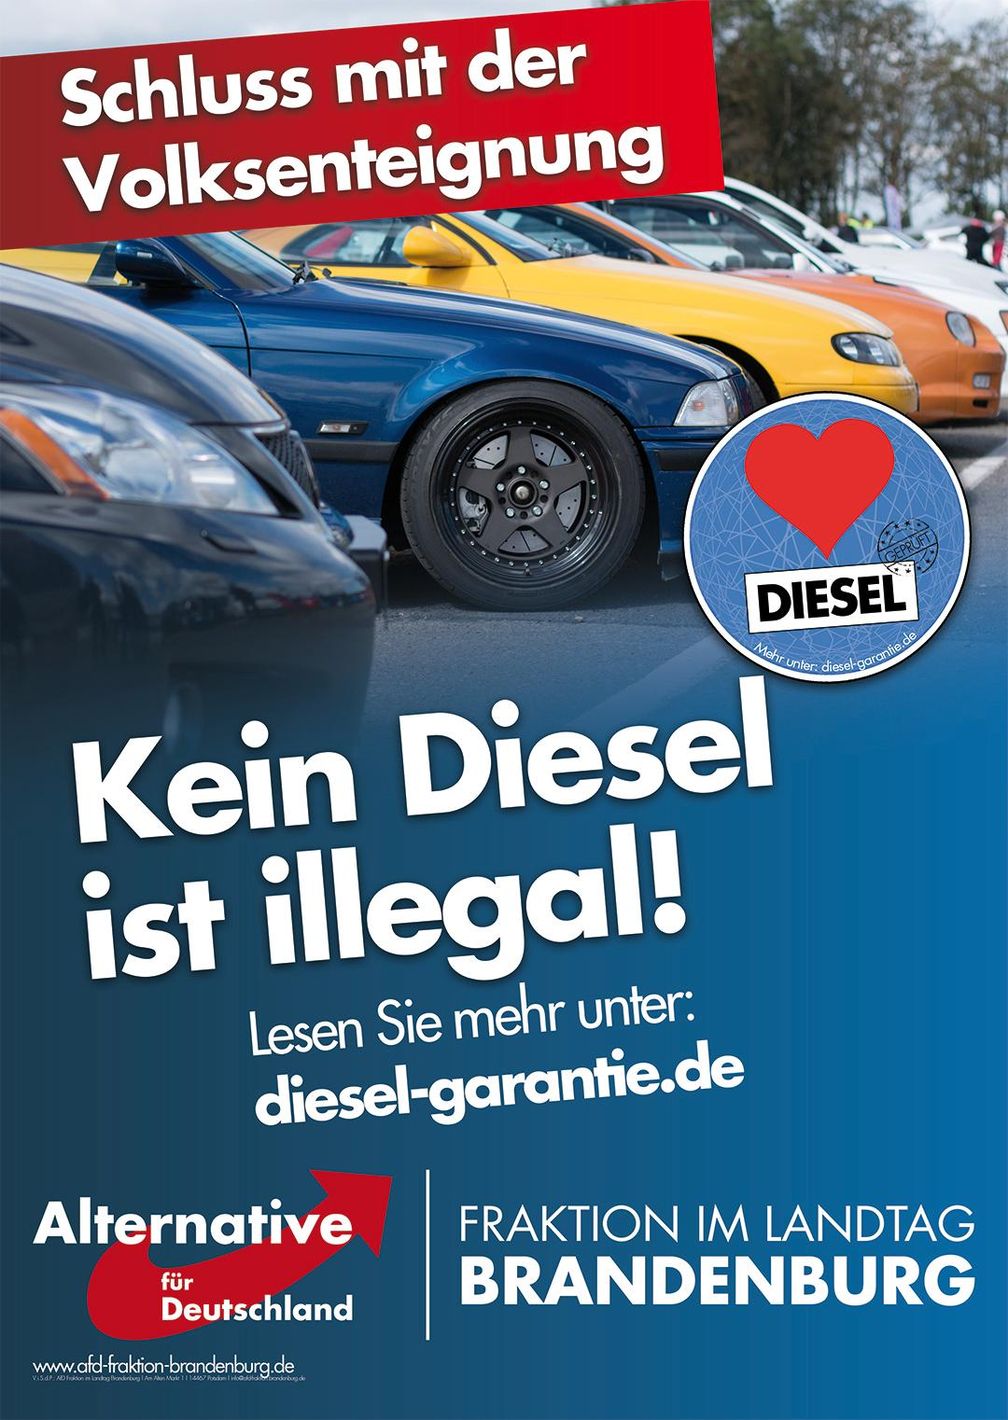 Plakatmotiv "Kein Diesel ist illegal". Bild: "obs/AfD-Fraktion im Brandenburgischen Landtag/AfD-Fraktion im Landtag BRB"